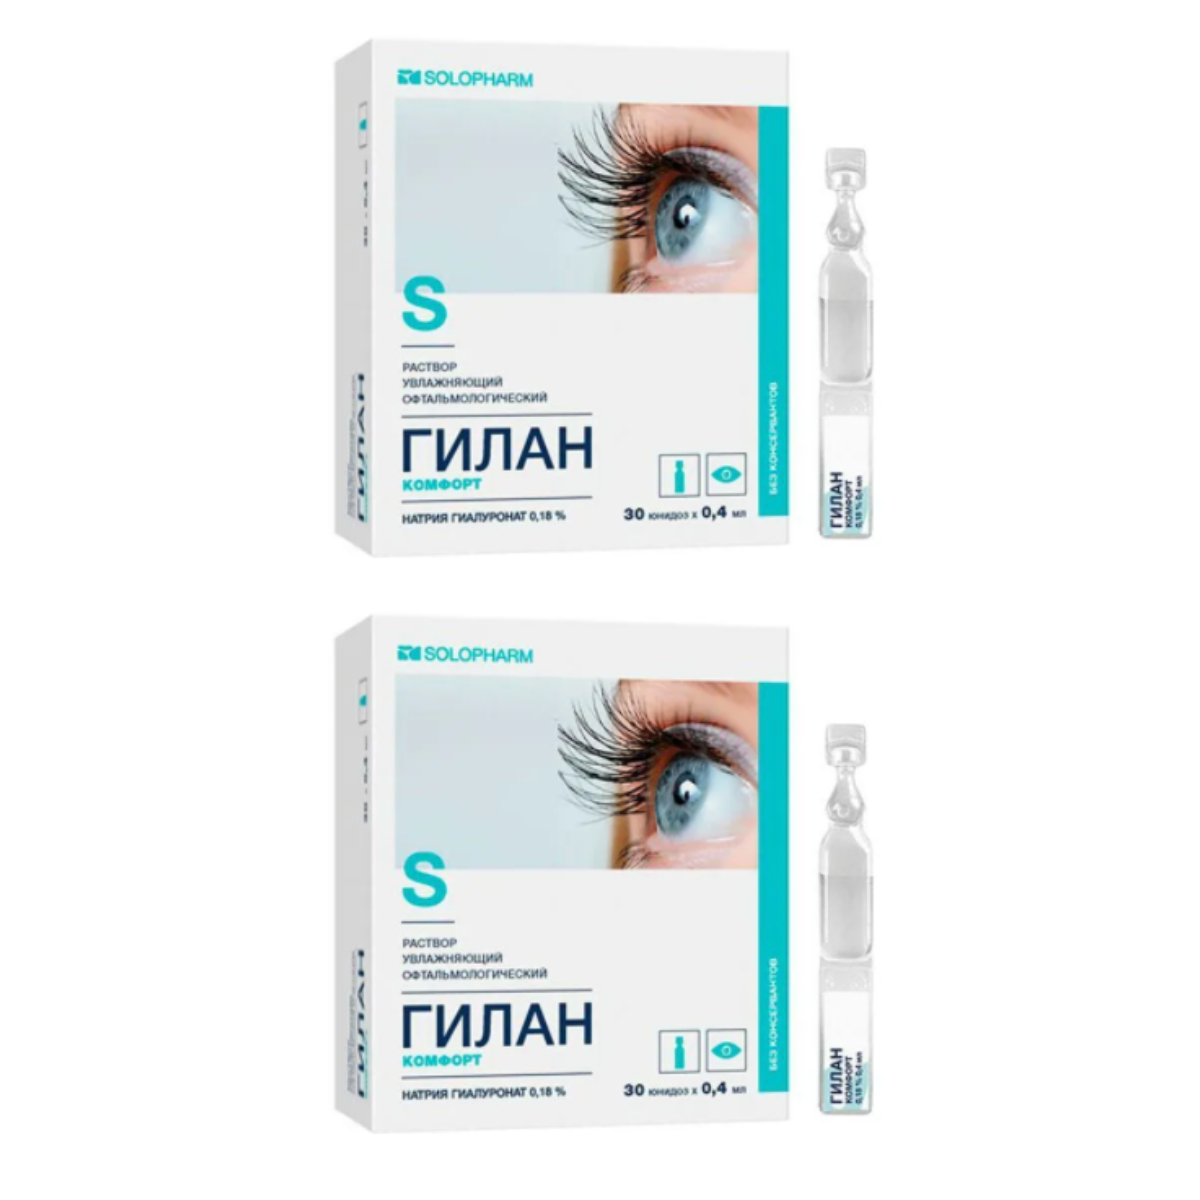 Капли для глаз Solopharm Гилан комфорт 0.18% 0,4 мл 30 юнидоз - 2 шт.